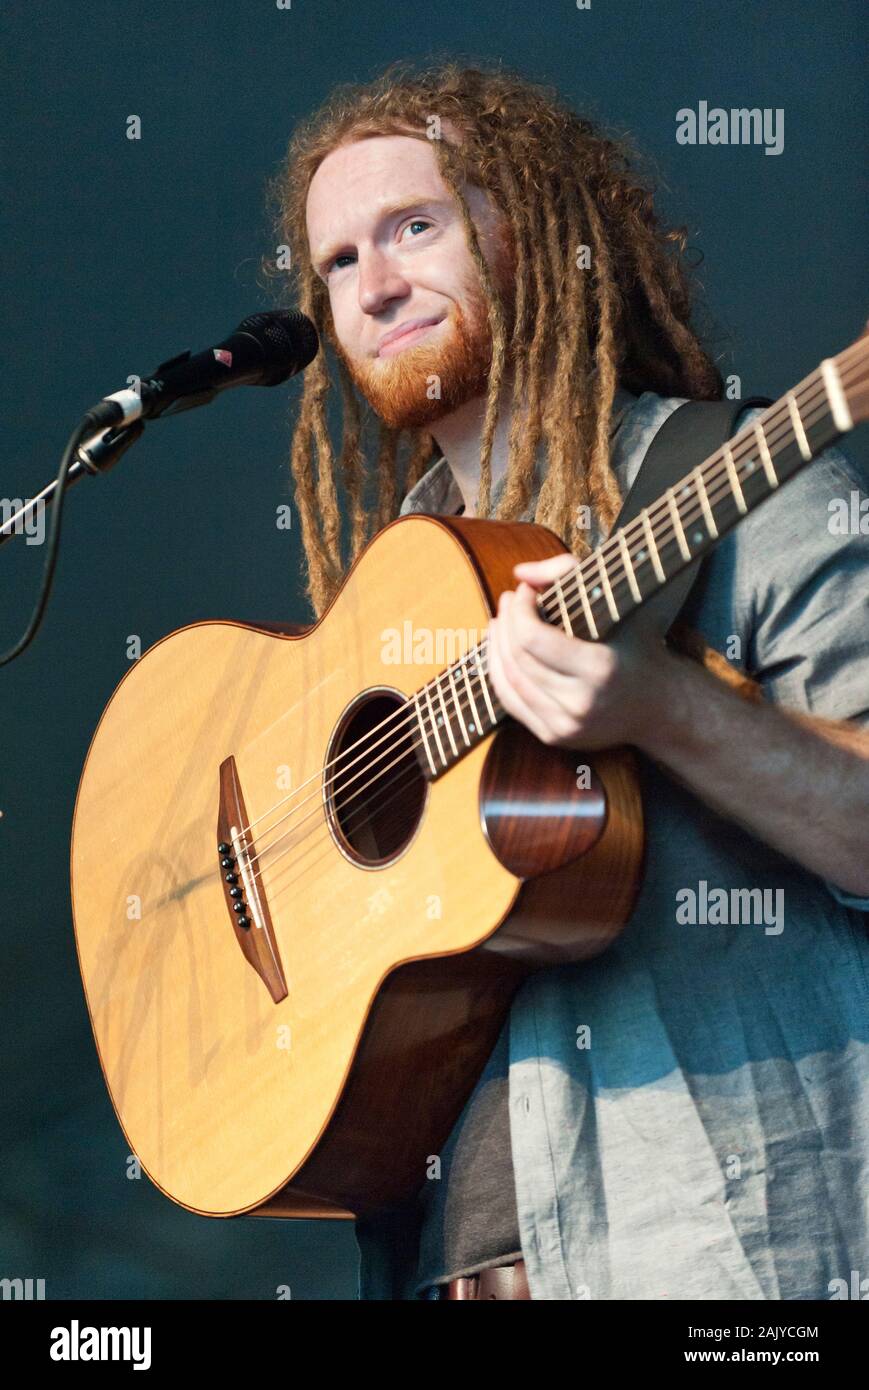 English singer/songwriter Newton Faulkner performing at the Cornbury festival, UK, 30/6/12 Stock Photo